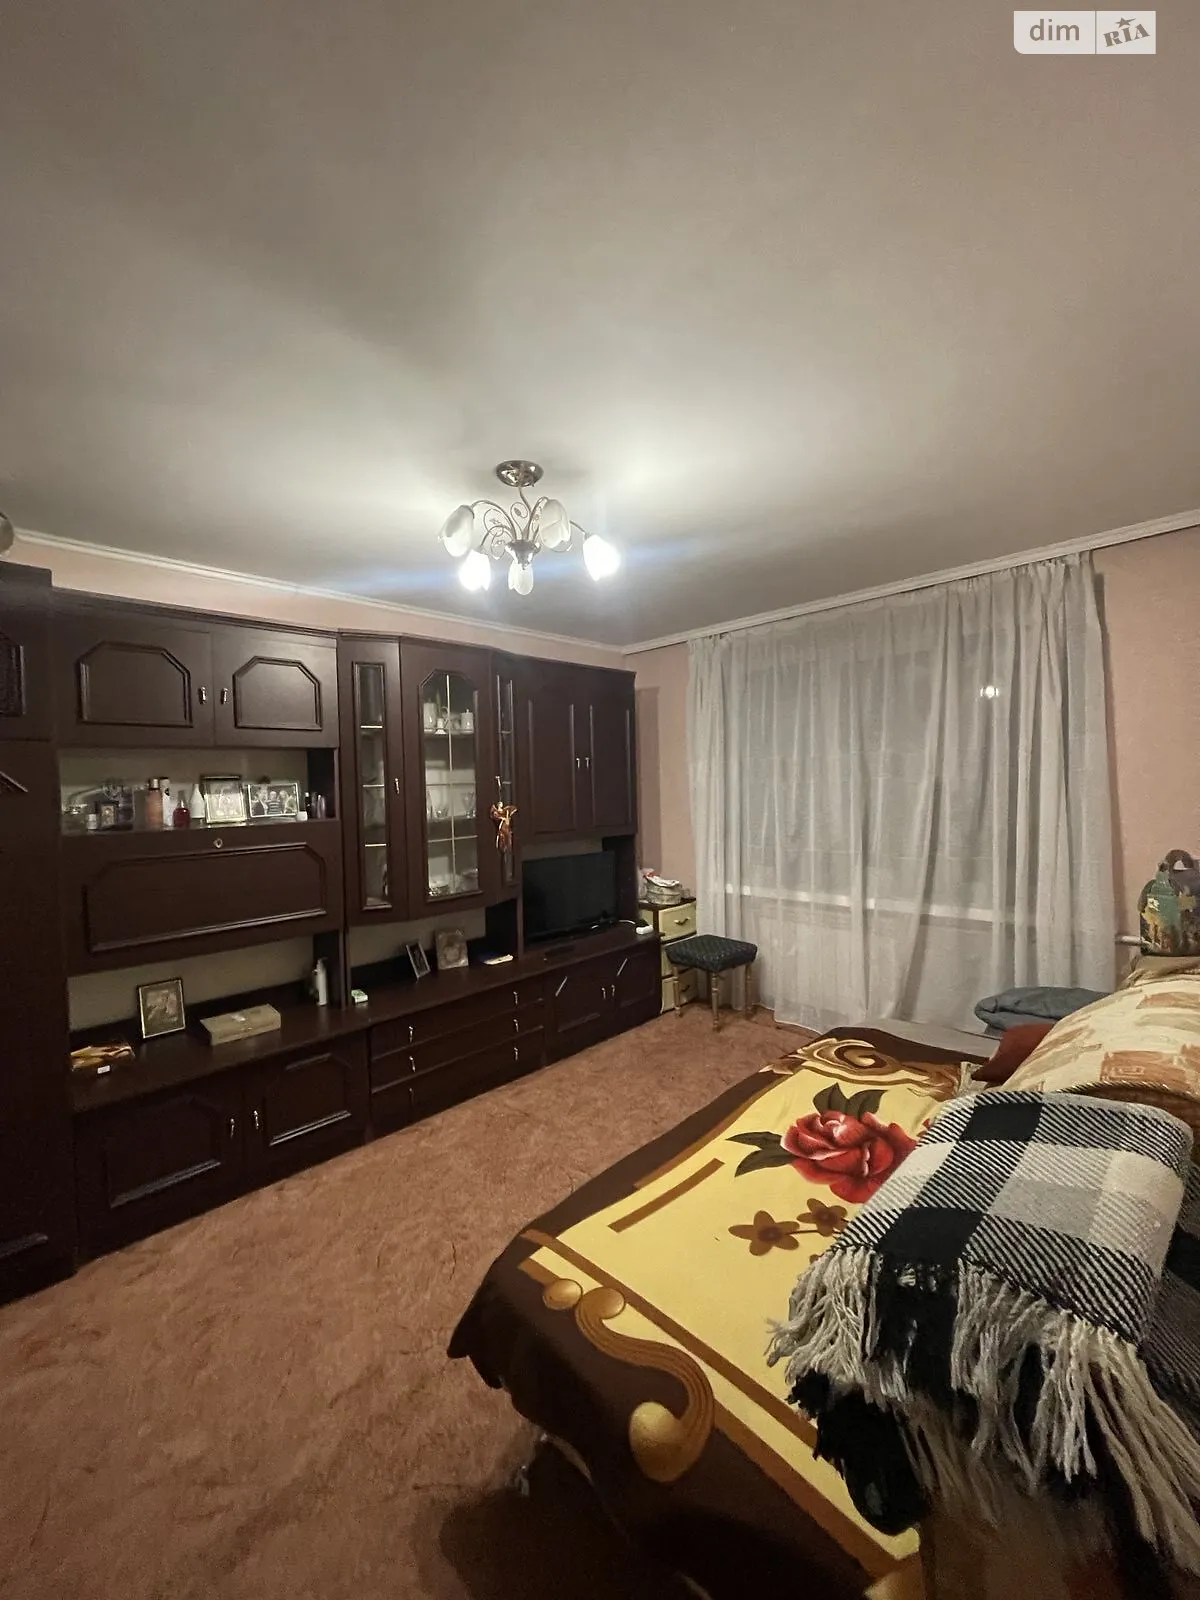 2-кімнатна квартира 52 кв. м у Тернополі, цена: 34500 $ - фото 1